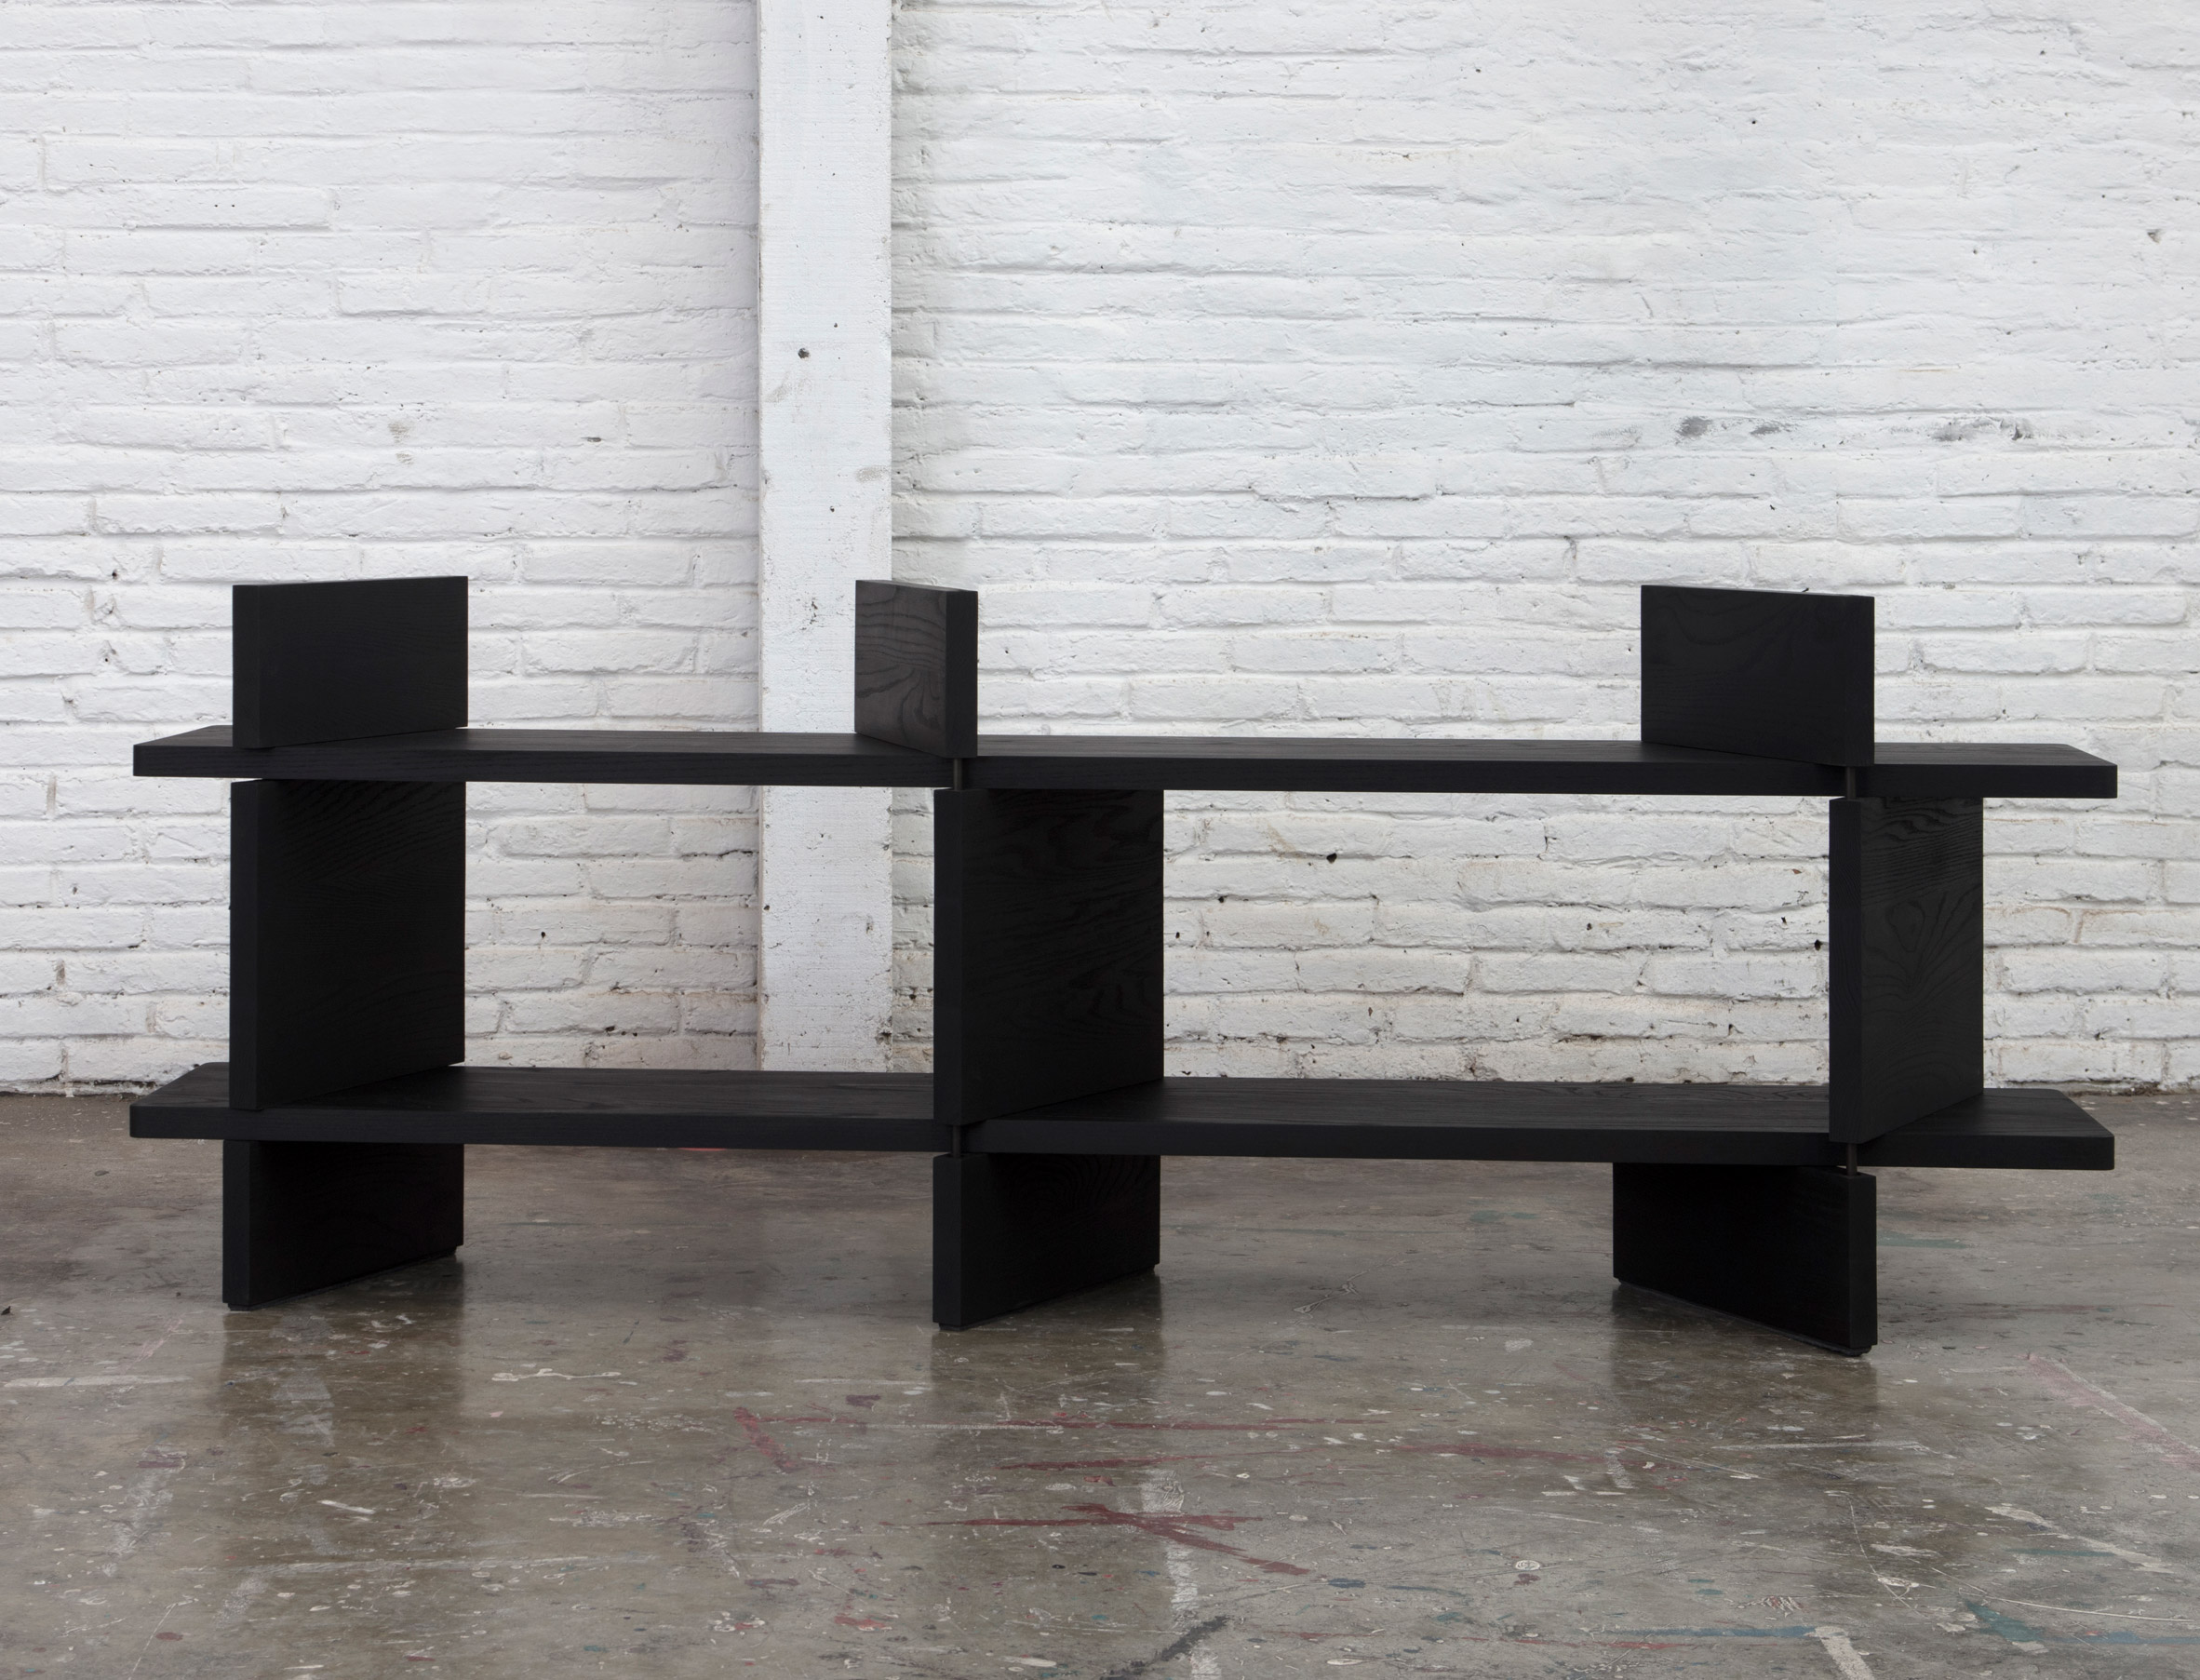 Esrawe exhibits black wooden furniture for Design Week Mexico